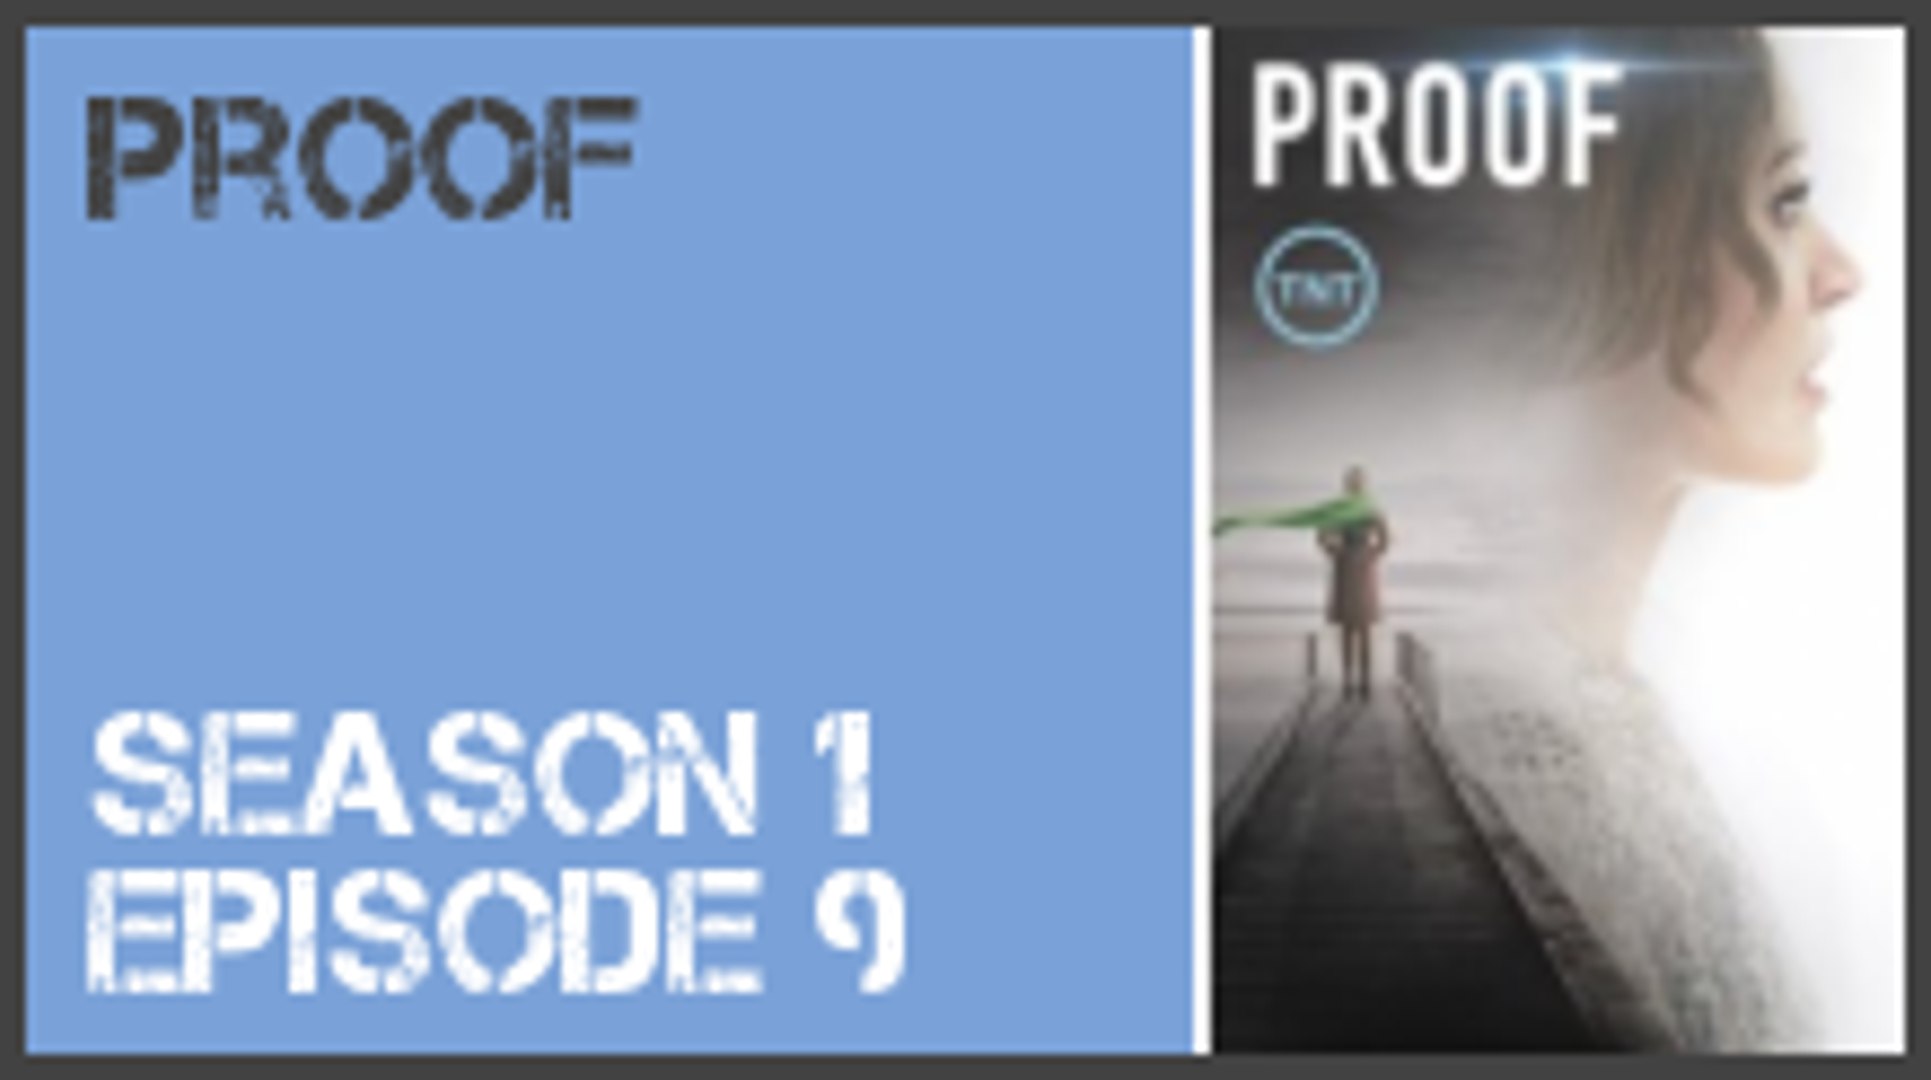 Proof season 1 episode 9 s1e9 - Dailymotion Video